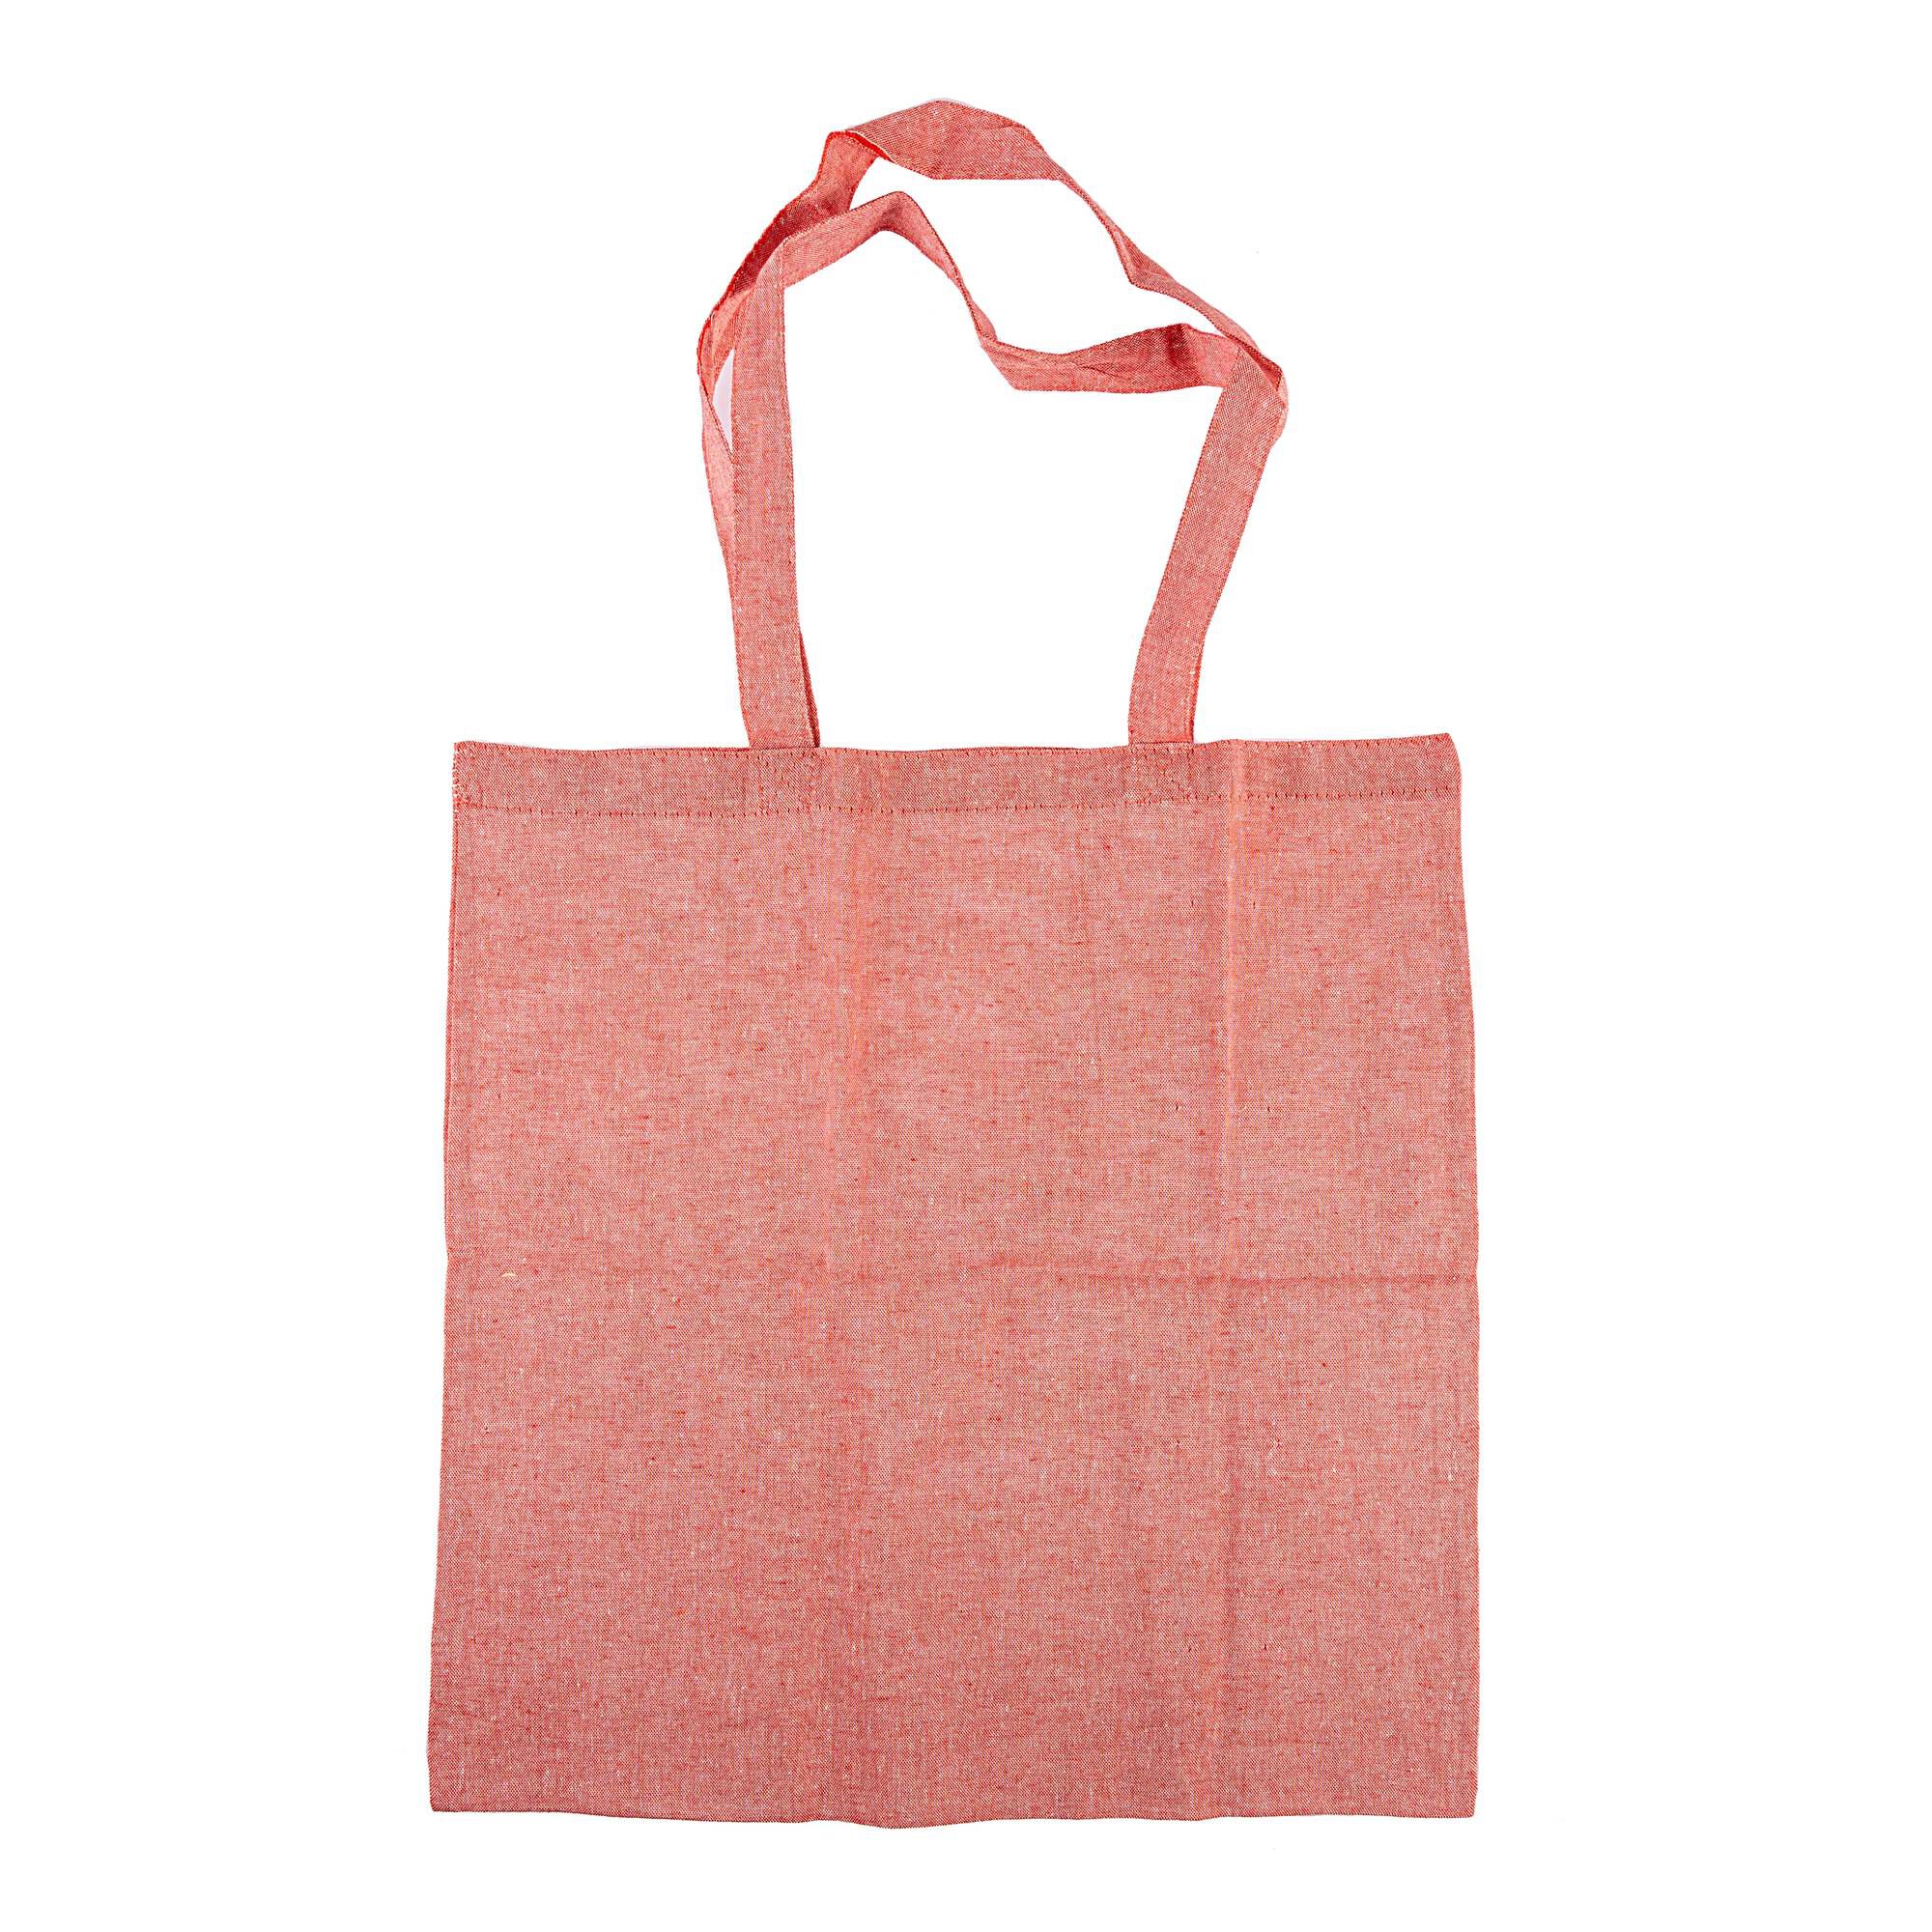 664463 1001 1 hobbycraft cotton shopping book bag red